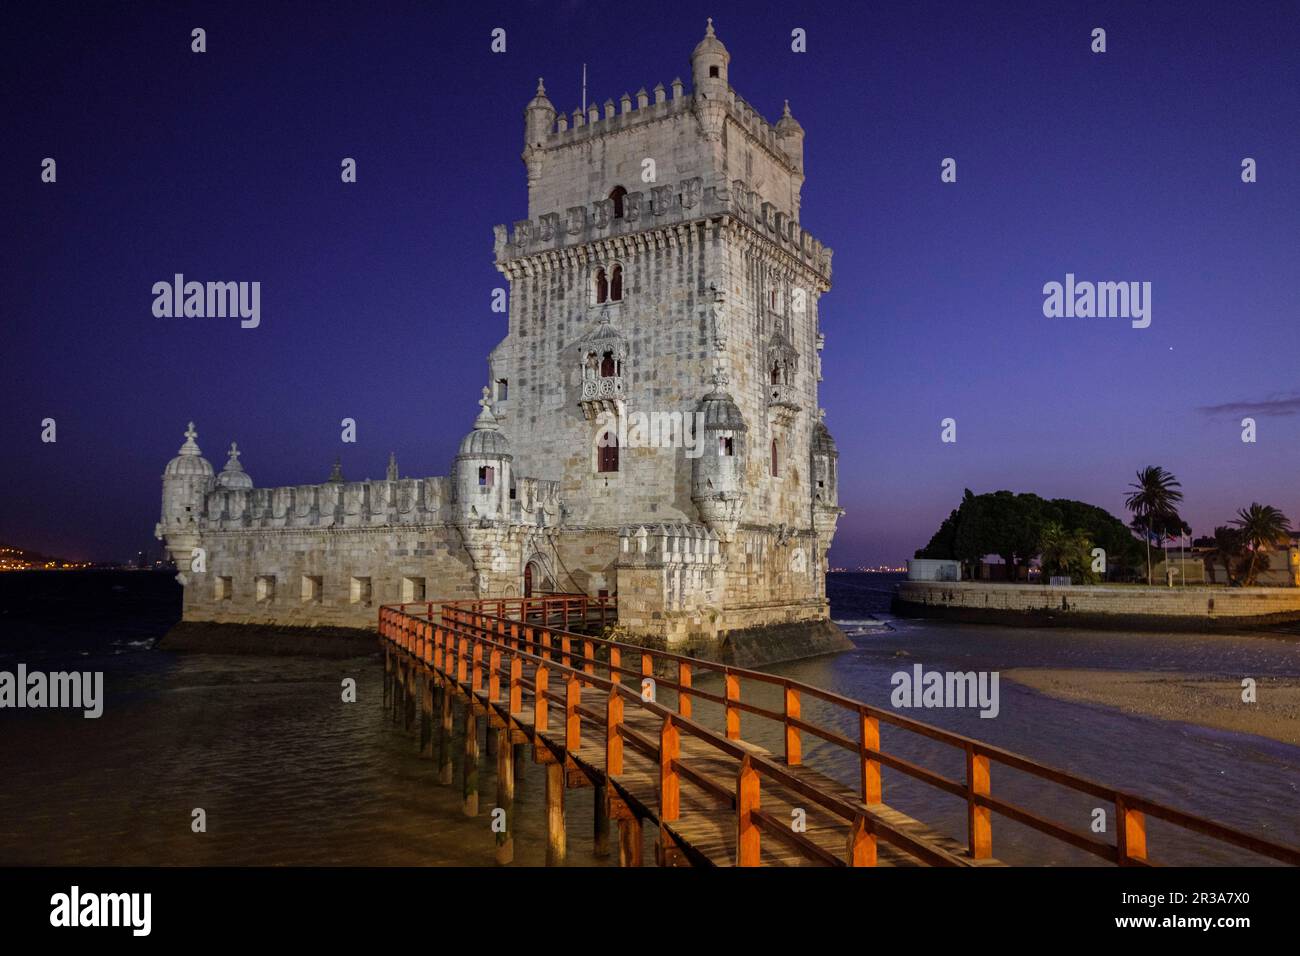 Torre de Belém, arquitectura Manuelina, Lisboa, Portugal. Stockfoto